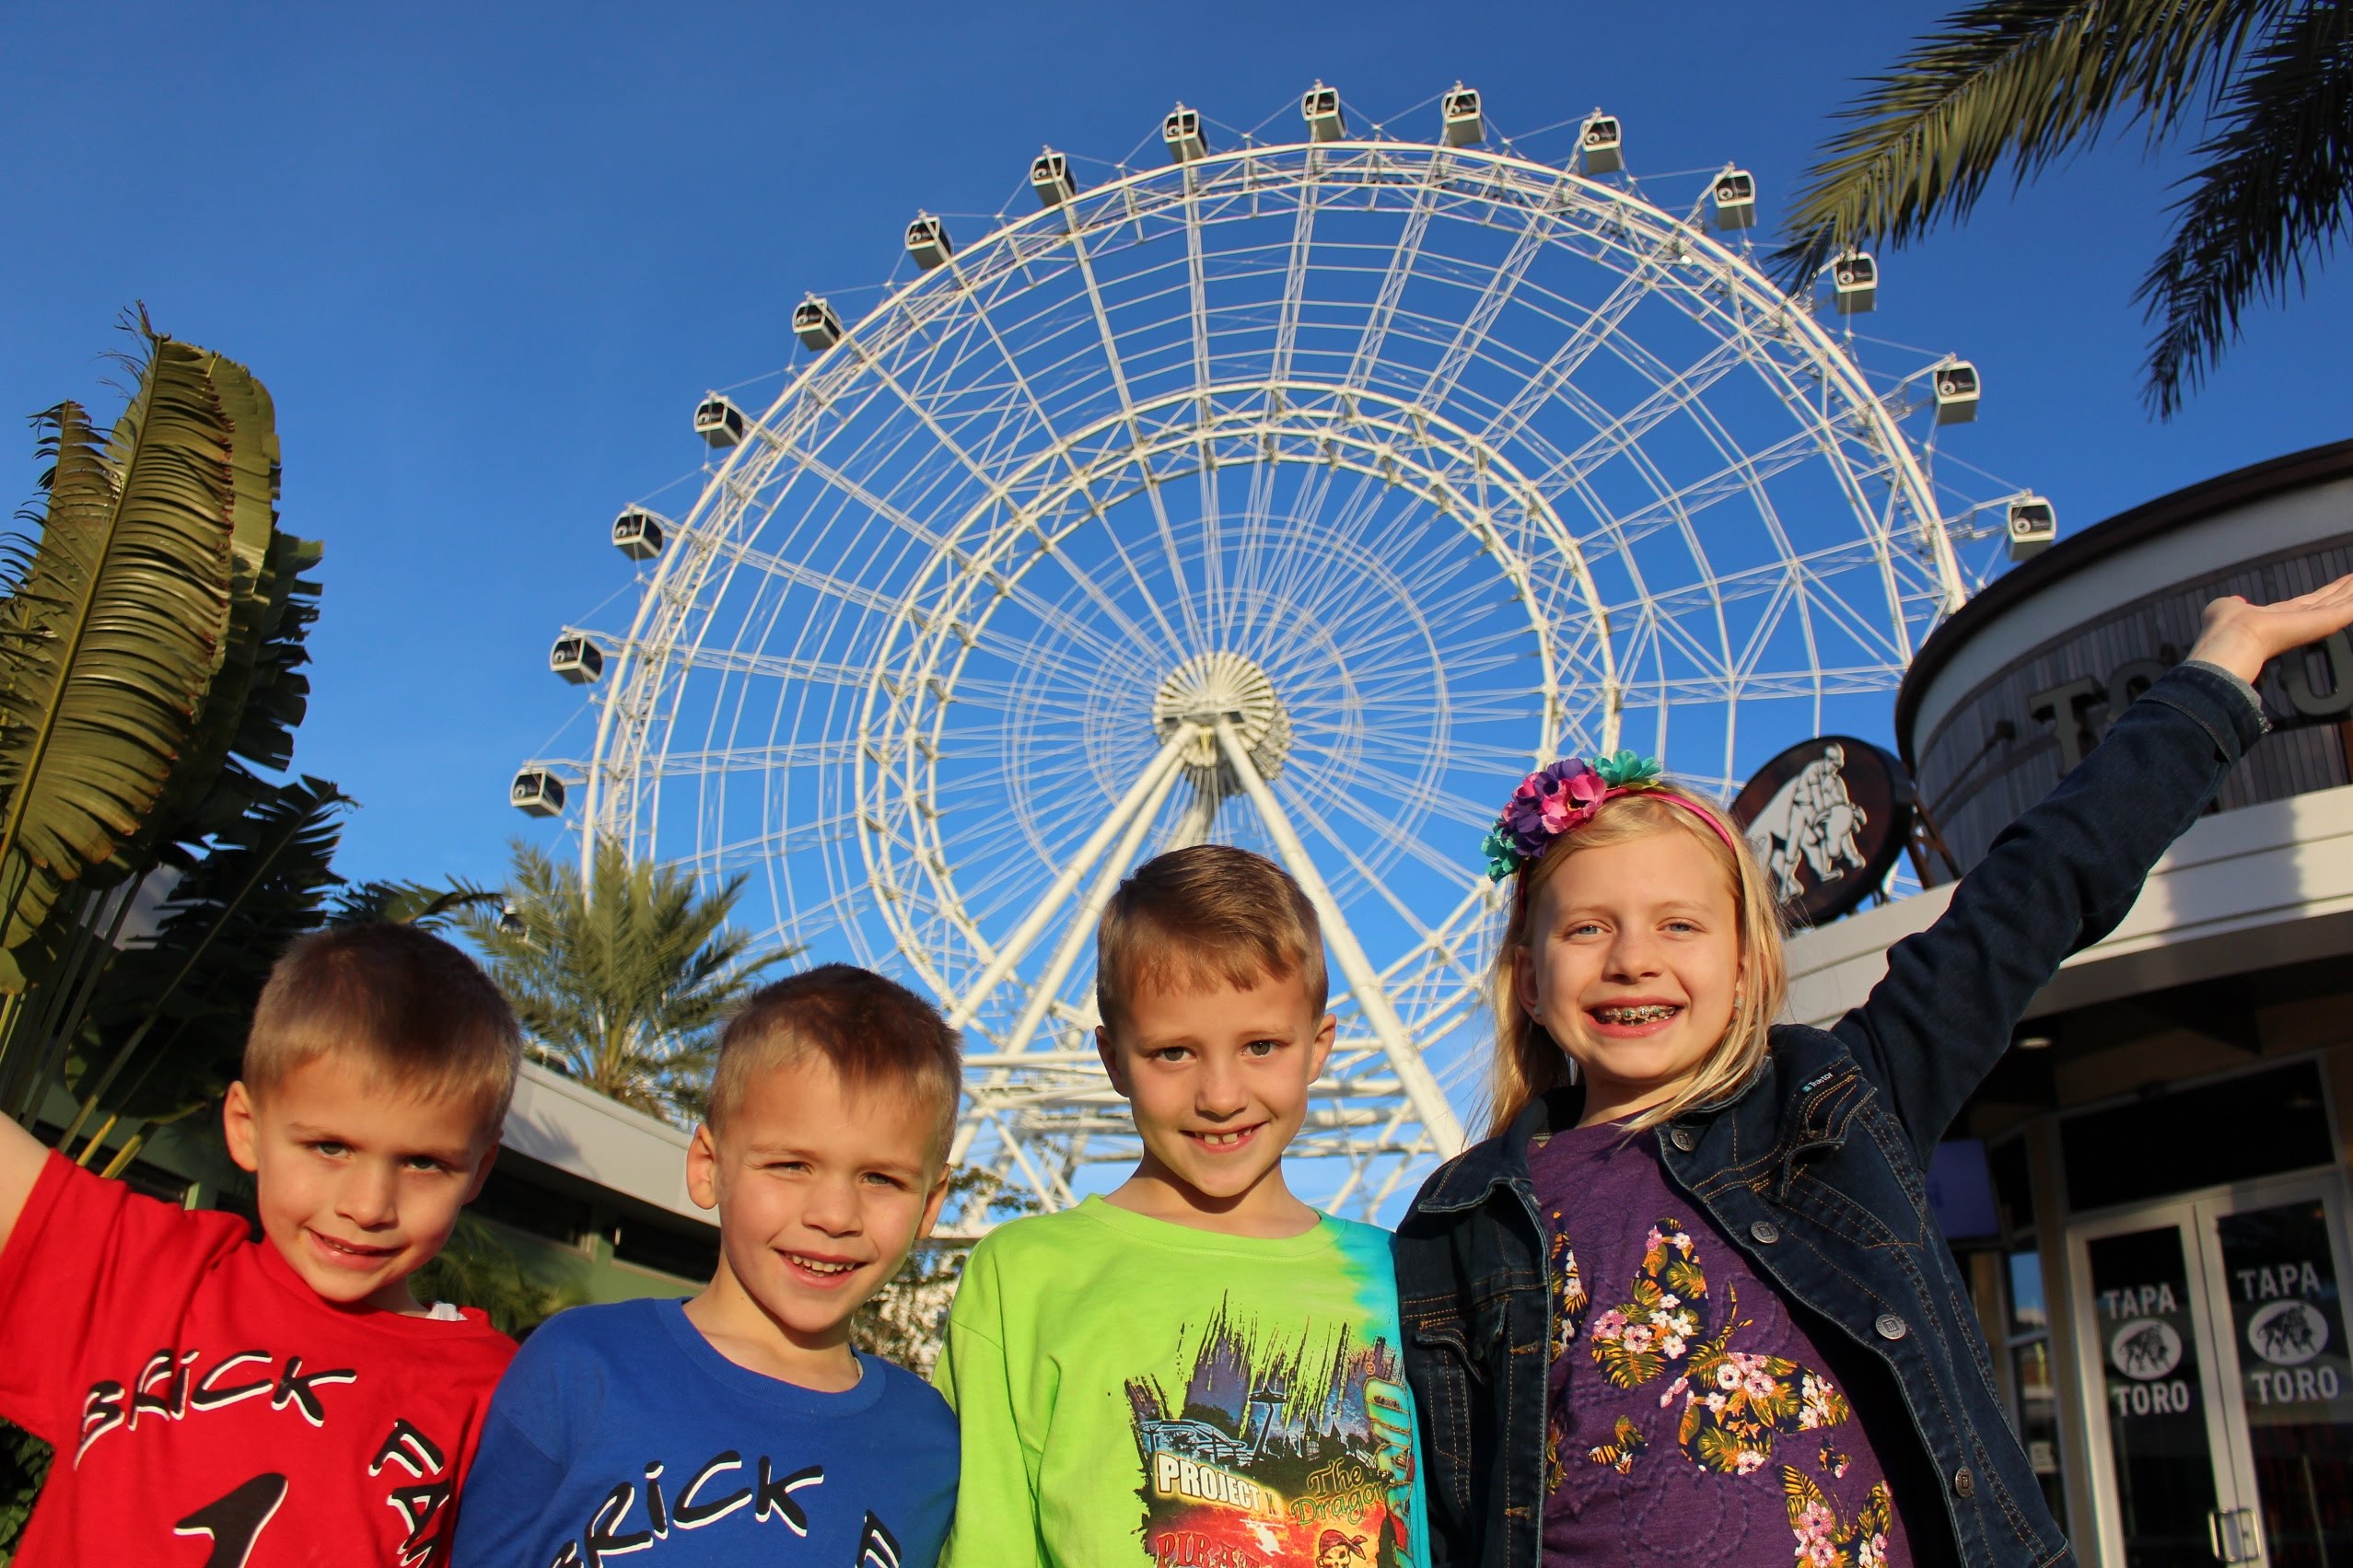 400 Feet IN THE SKY Riding the Orlando Eye Huge Ferris Wheel!!